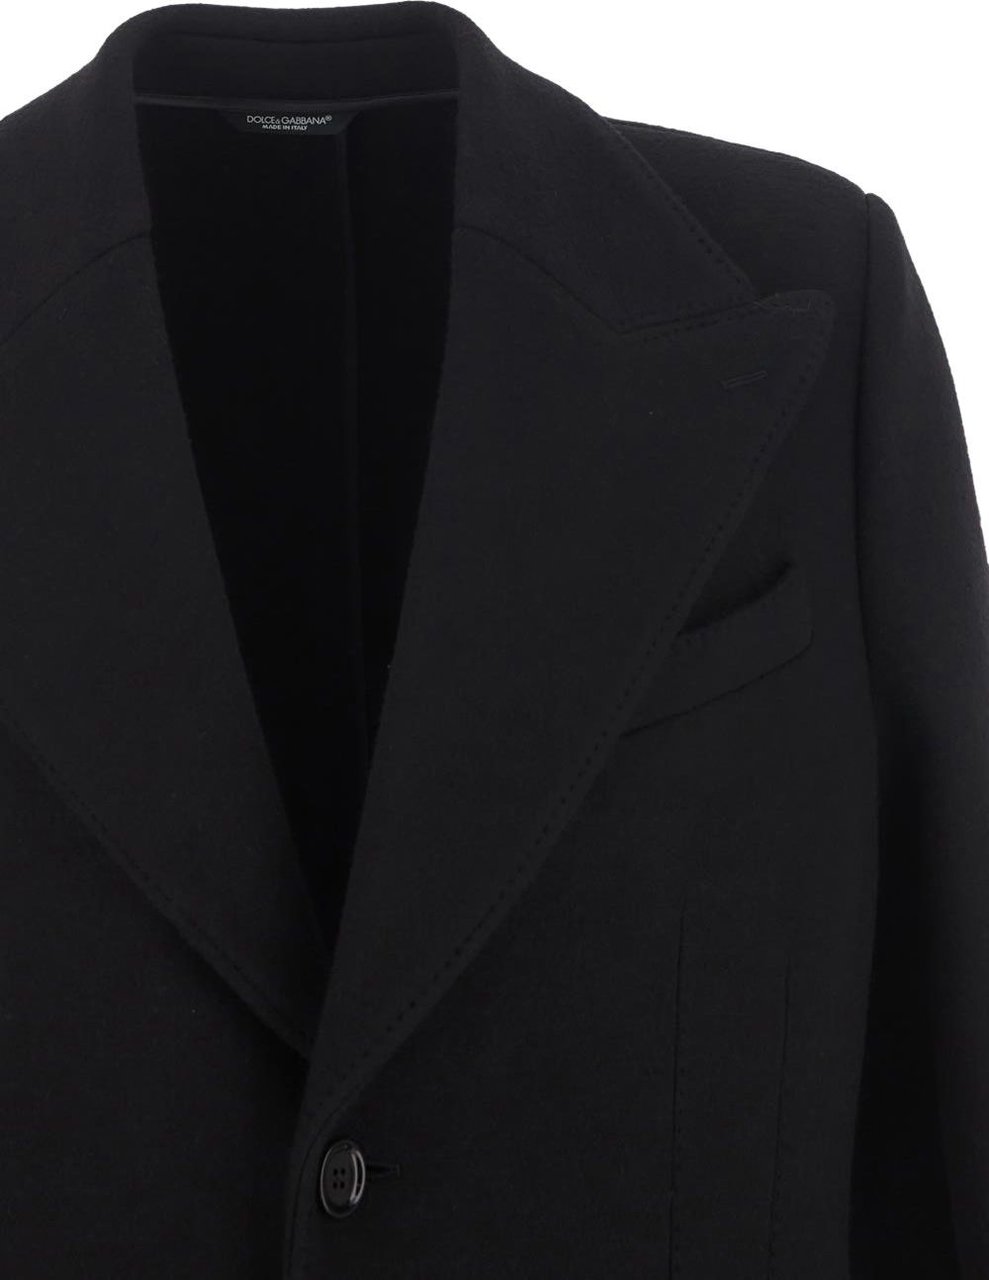 Dolce & Gabbana Long Coat Zwart